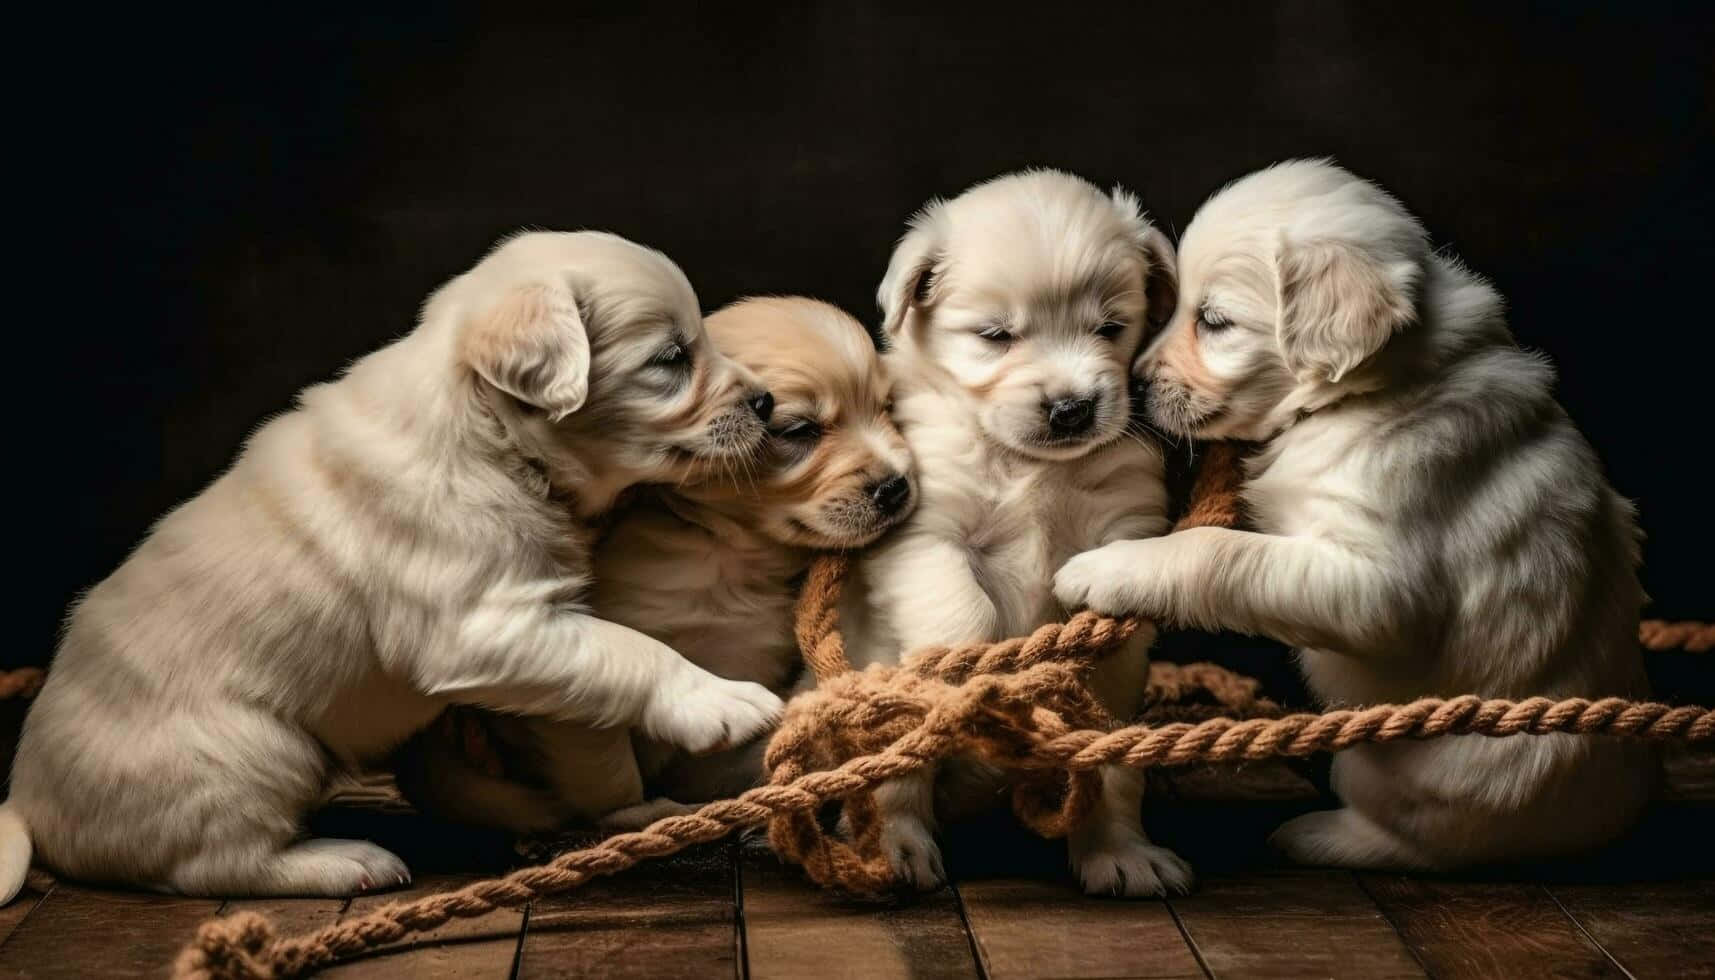 Playful Puppy Huddle.jpg Wallpaper